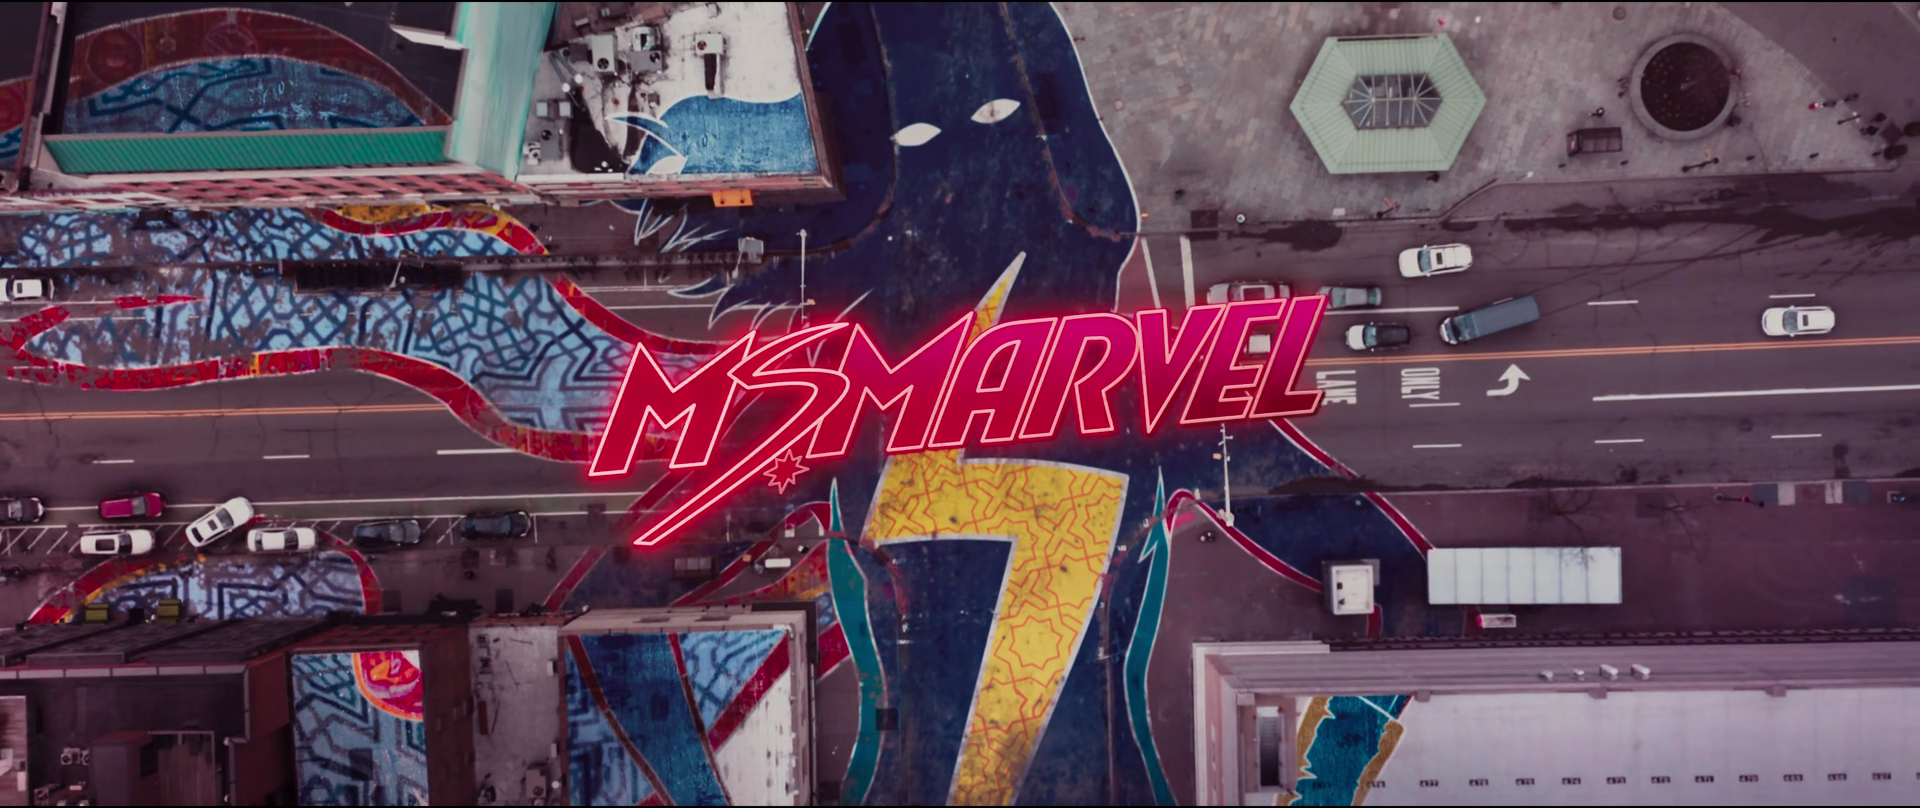 Ms. Marvel, Marvel Cinematic Universe Wiki